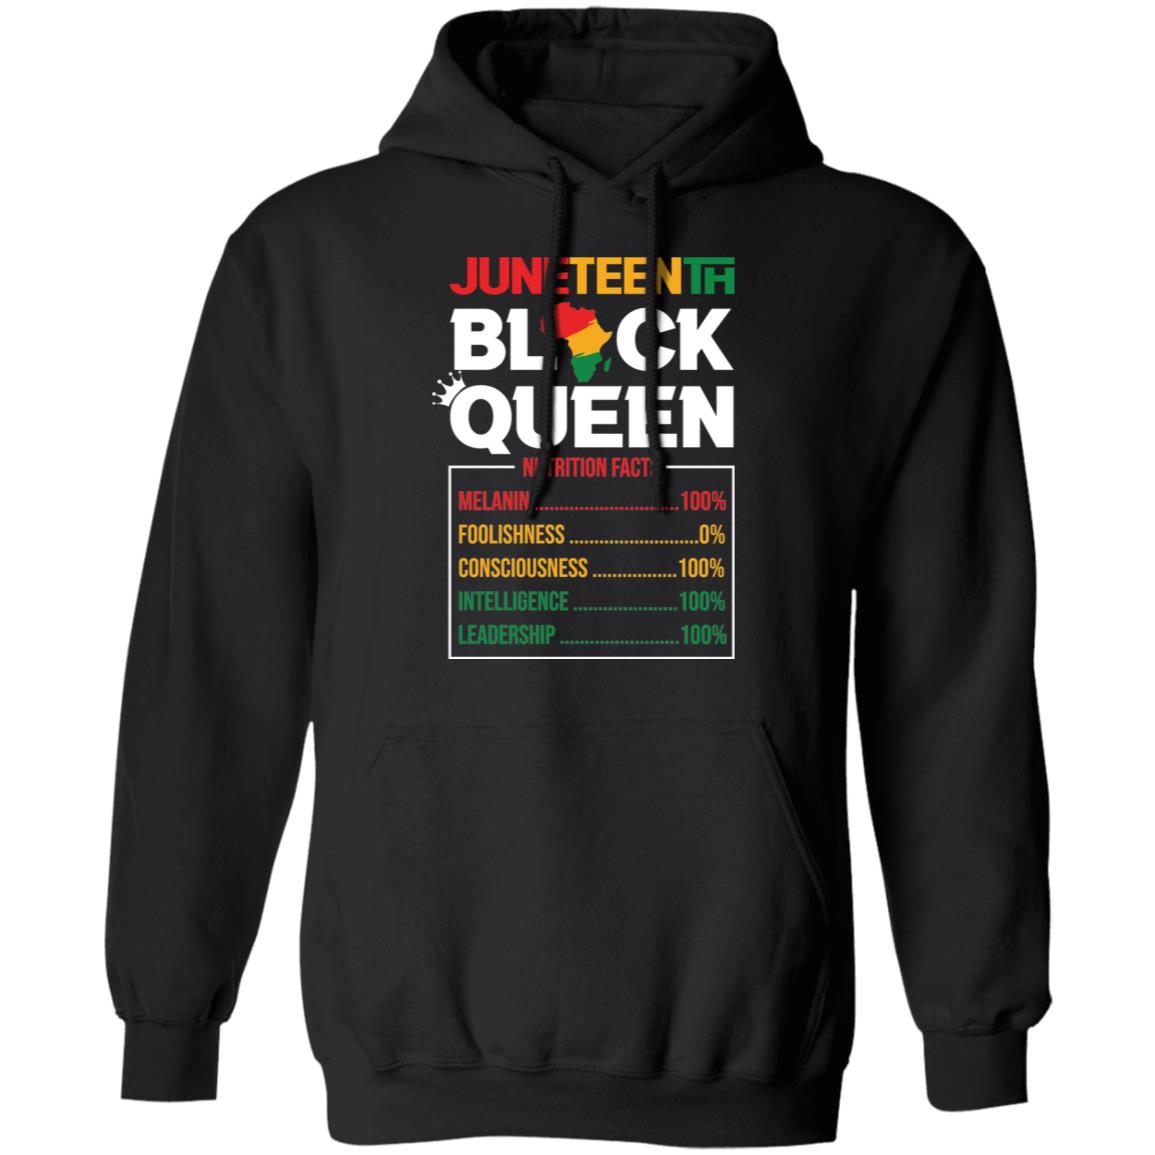 Juneteenth Black Queen Nutrition Facts T-shirt Apparel Gearment Unisex Hoodie Black S